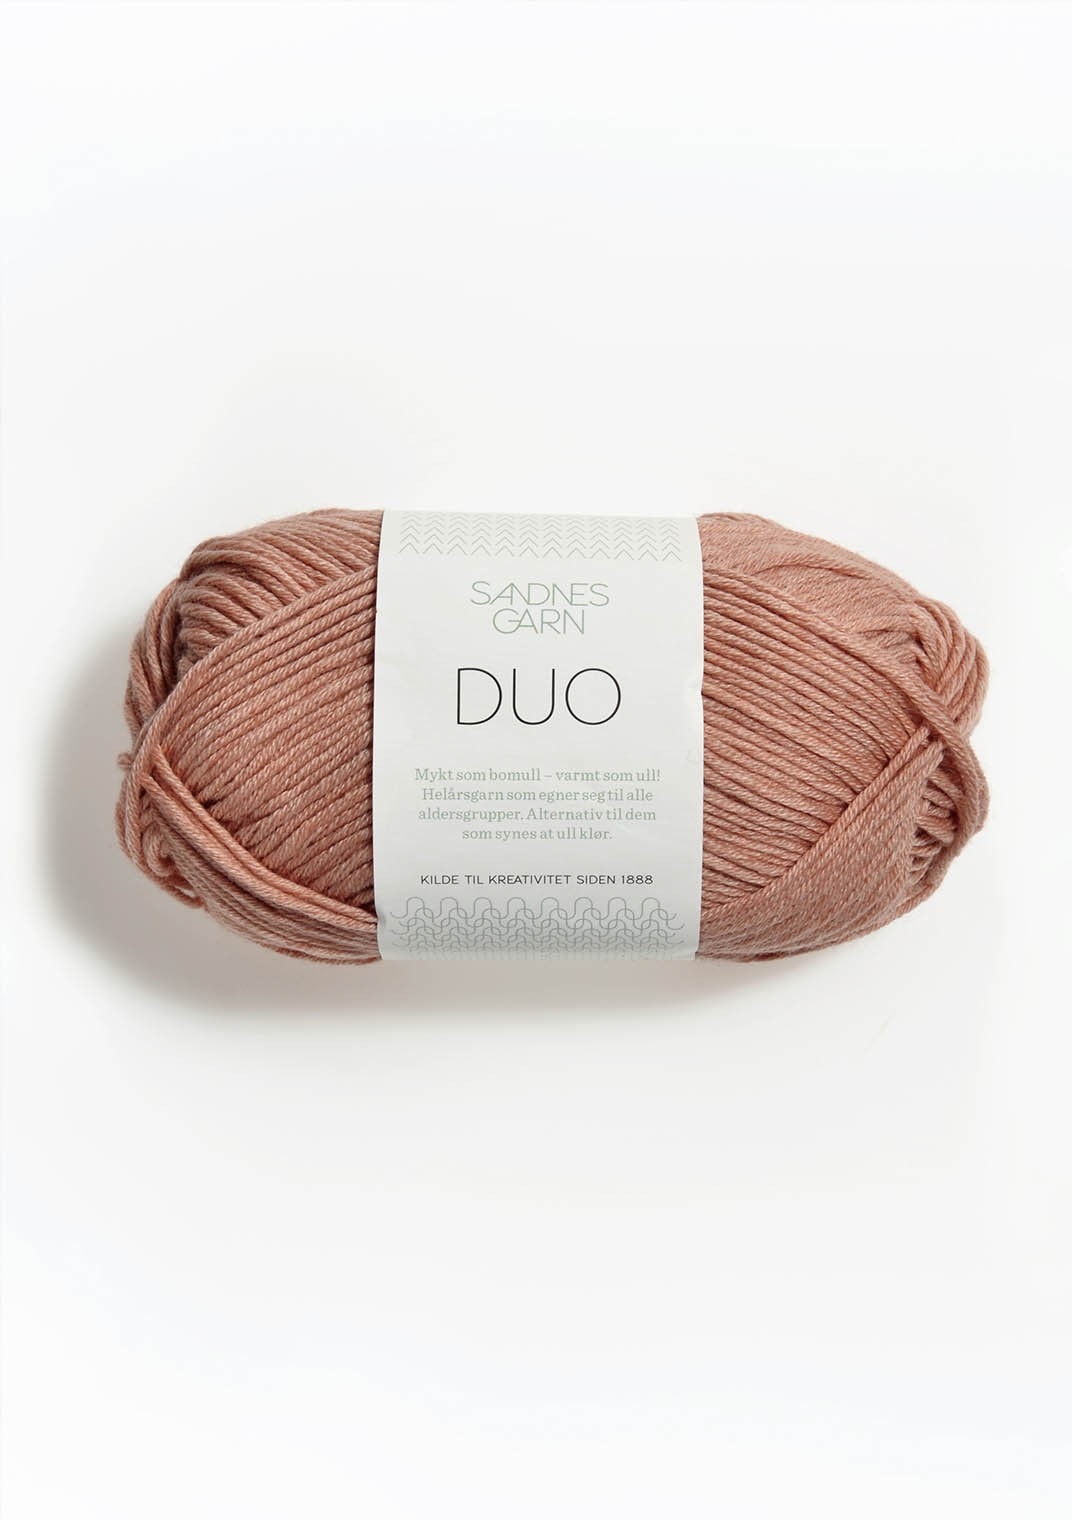 Duo (merino & cotton) yarn Sandnes